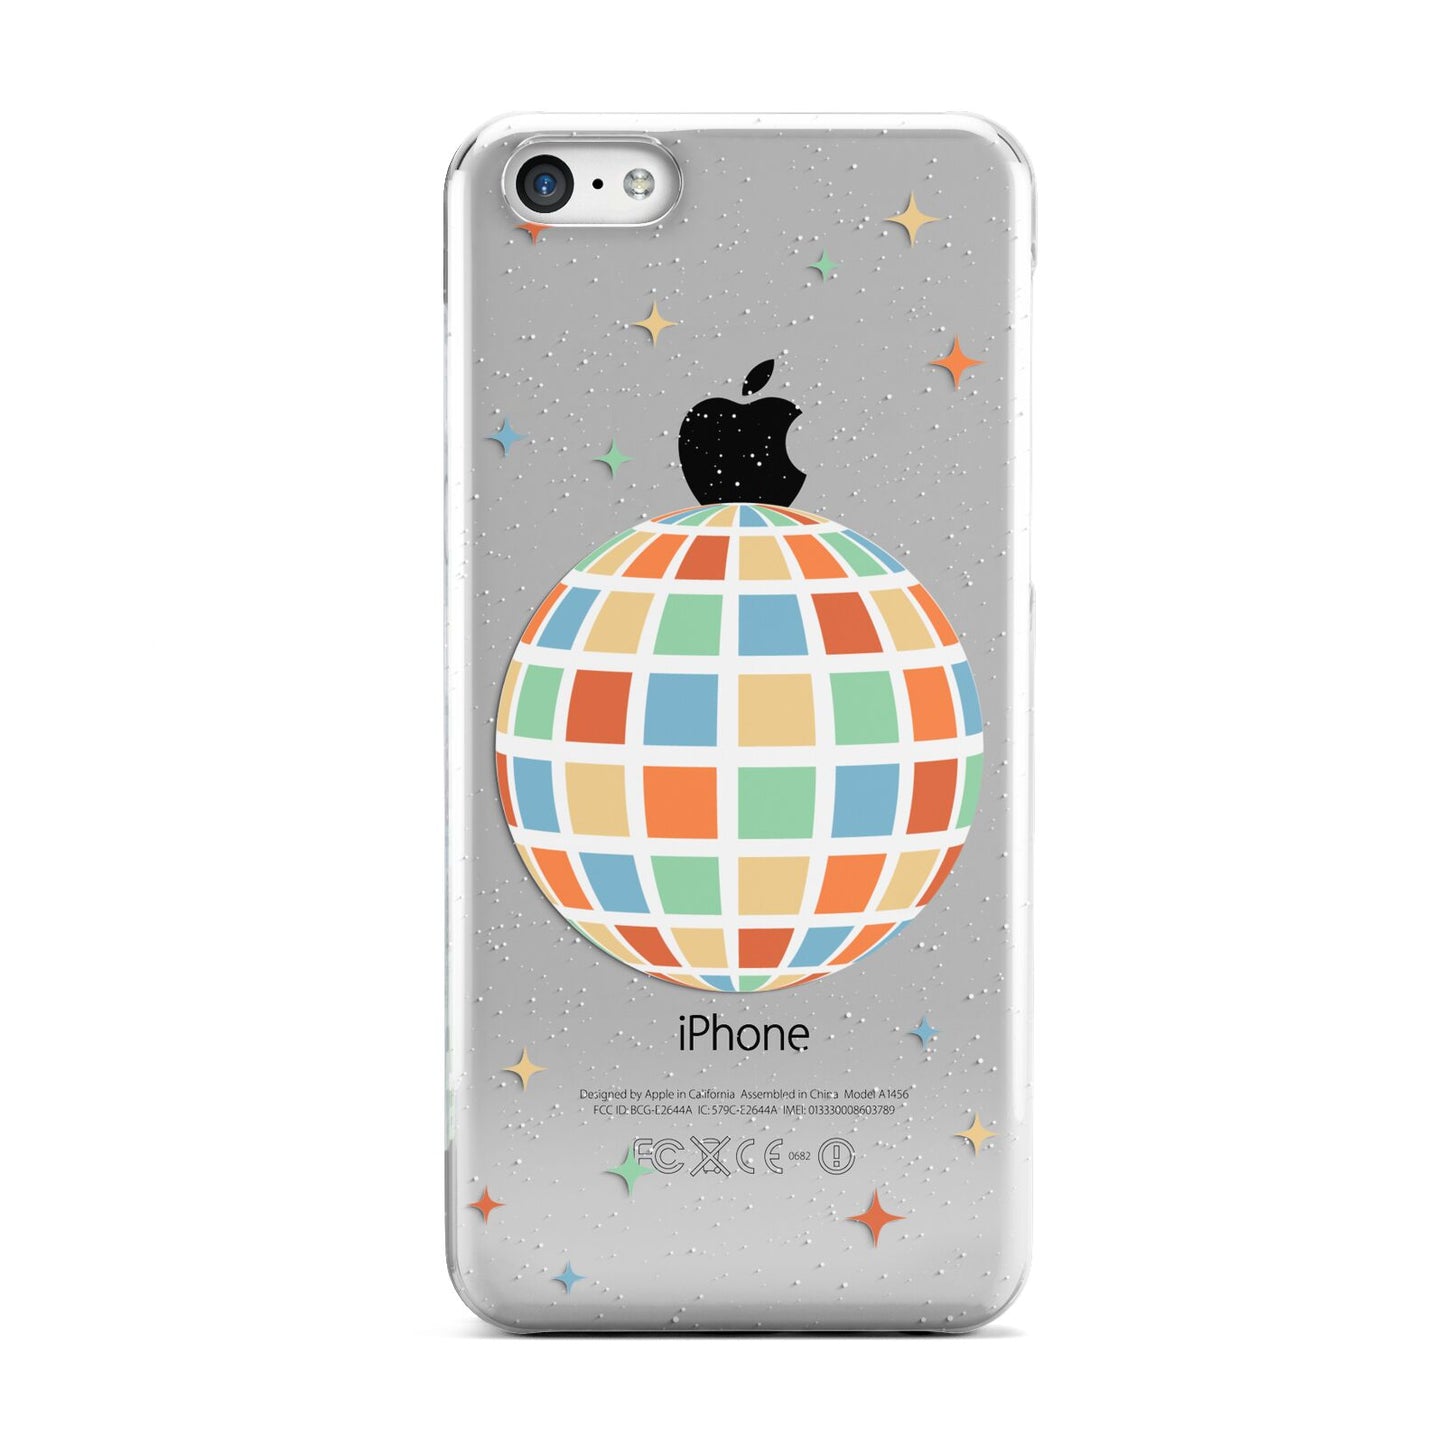 Disco Ball Apple iPhone 5c Case